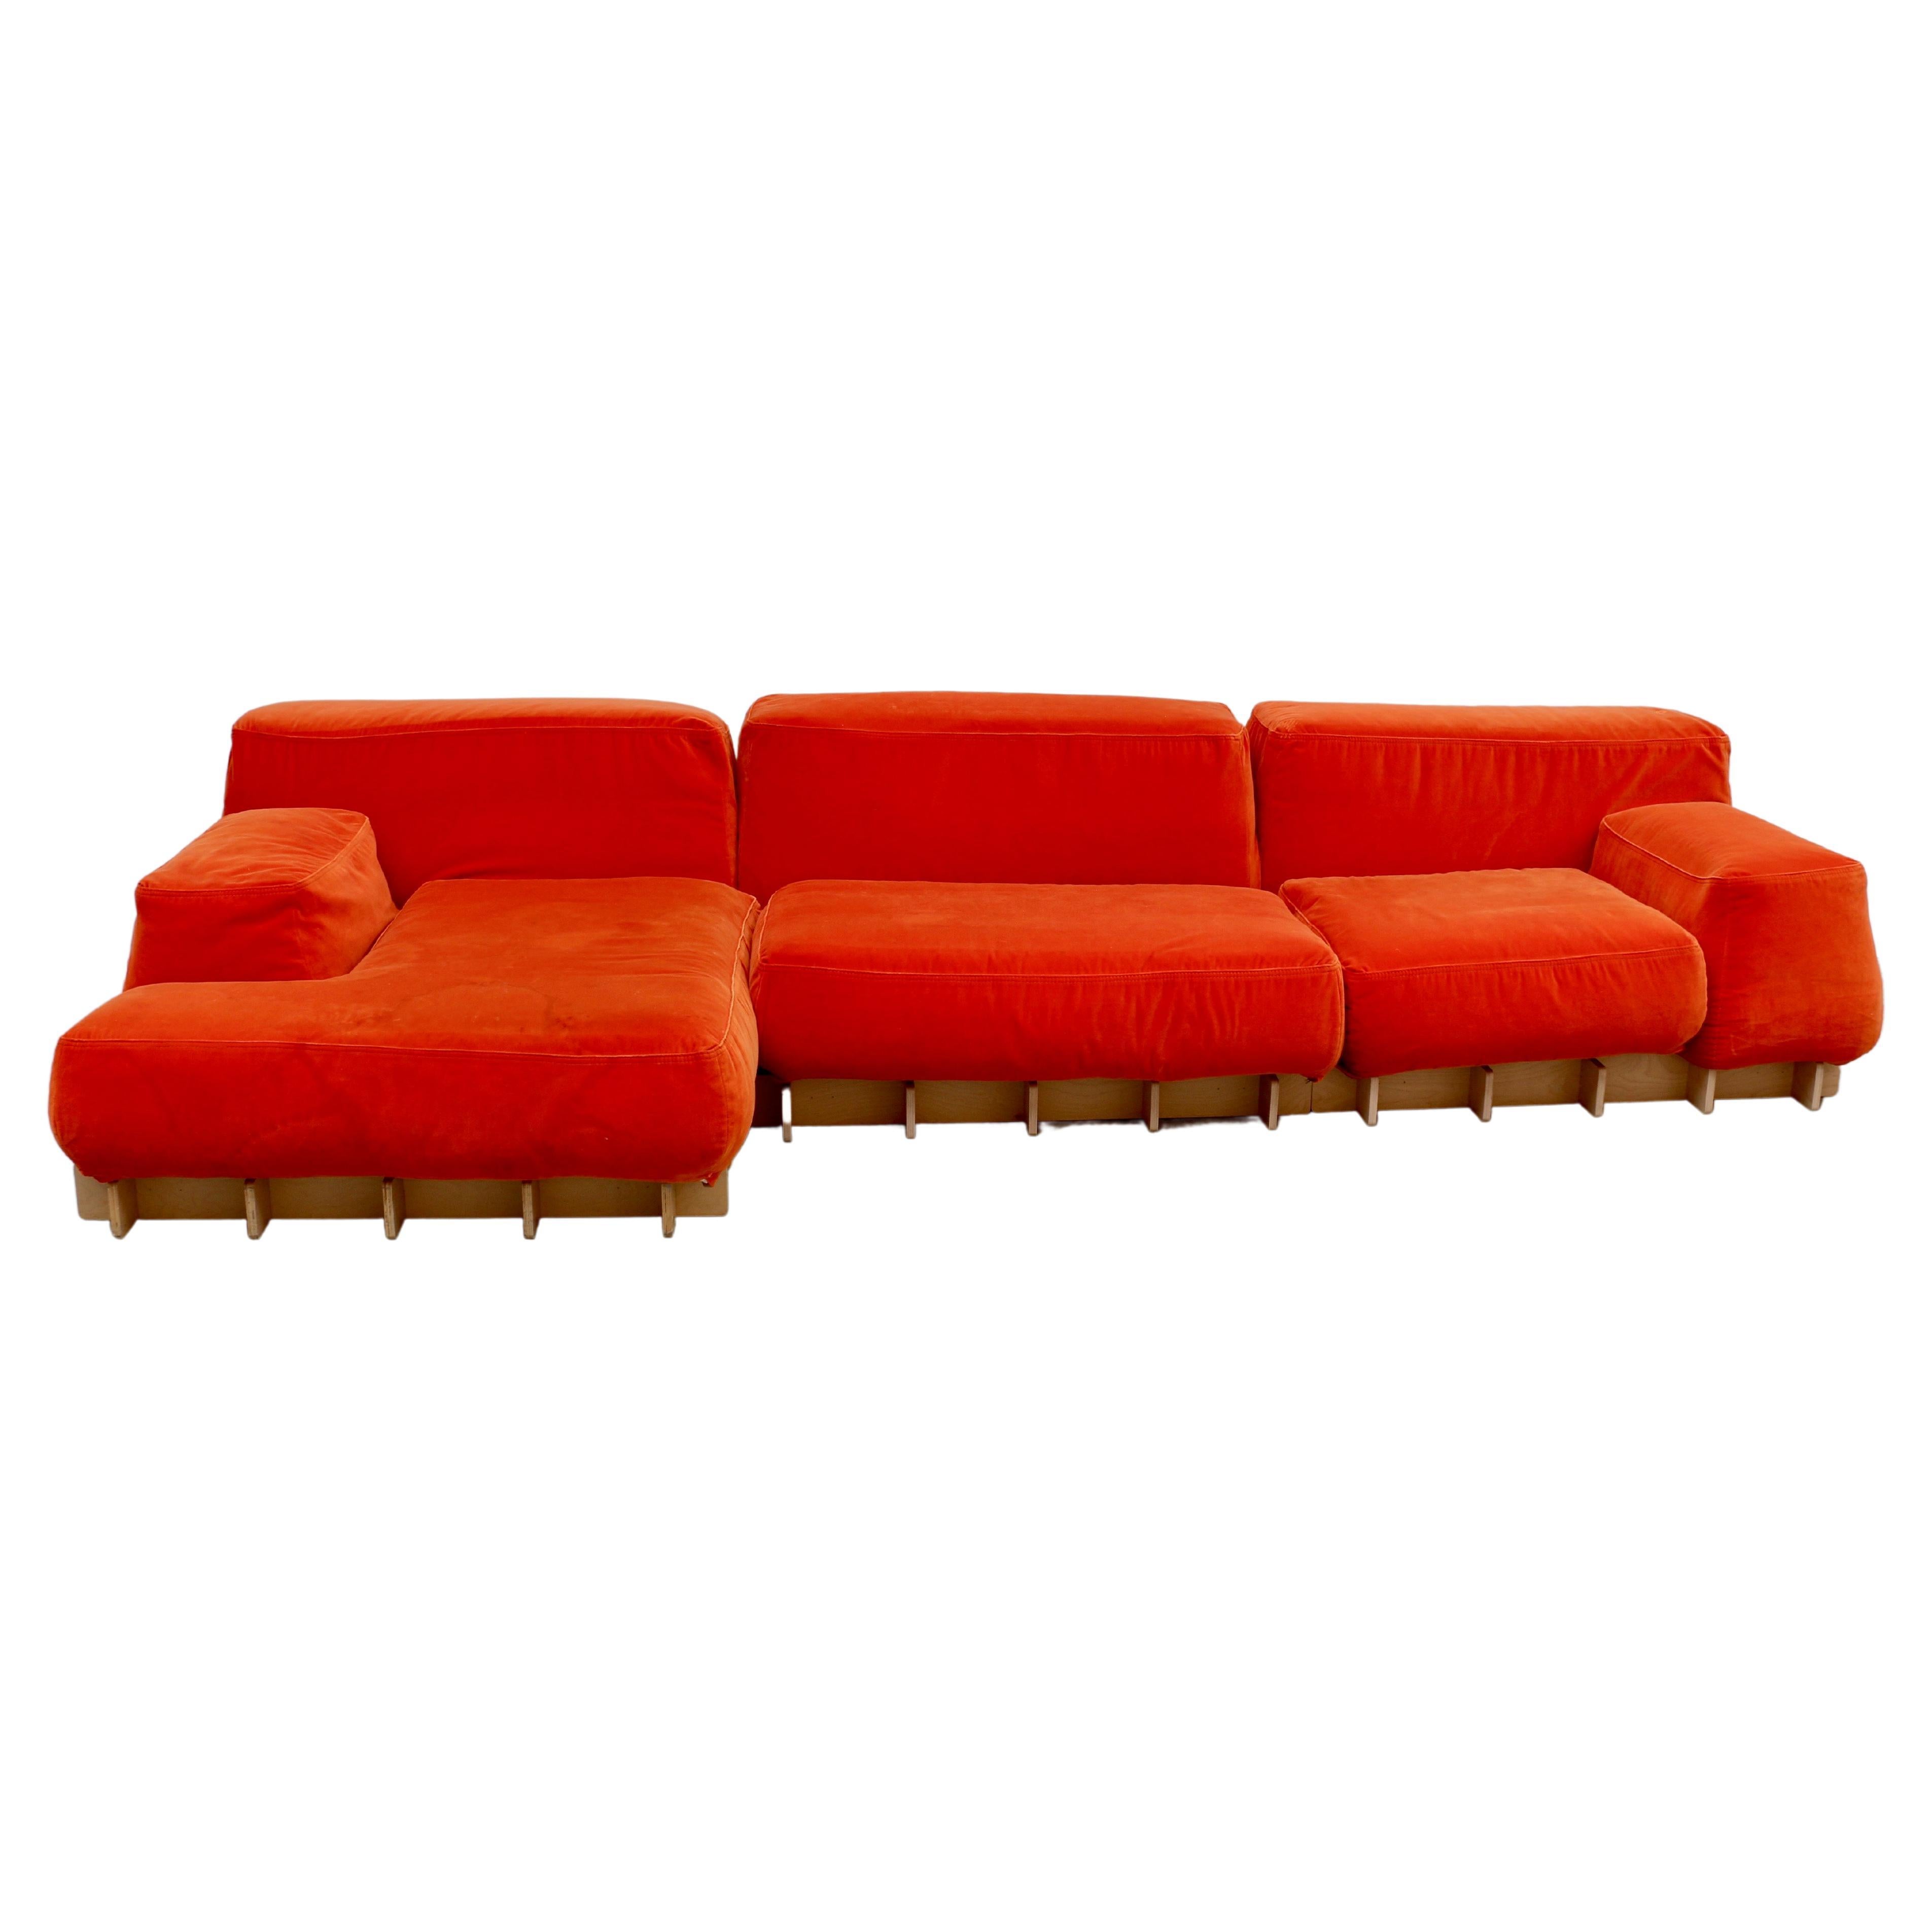 Modulares Sofa aus orangefarbenem Samt, Italien, 2000er Jahre